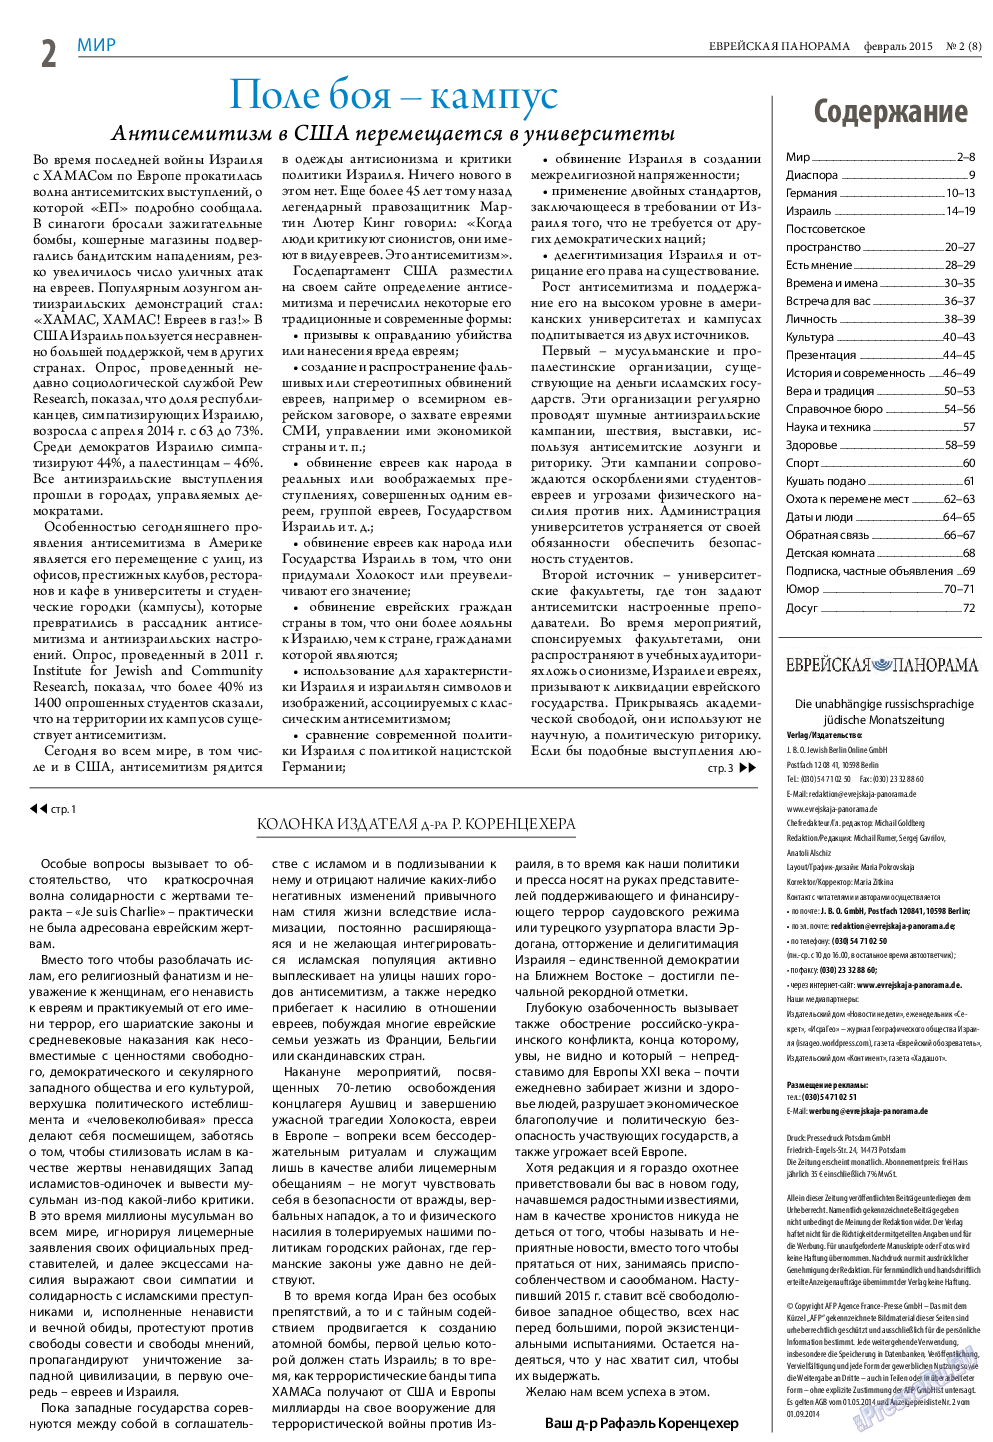 Еврейская панорама, газета. 2015 №2 стр.2